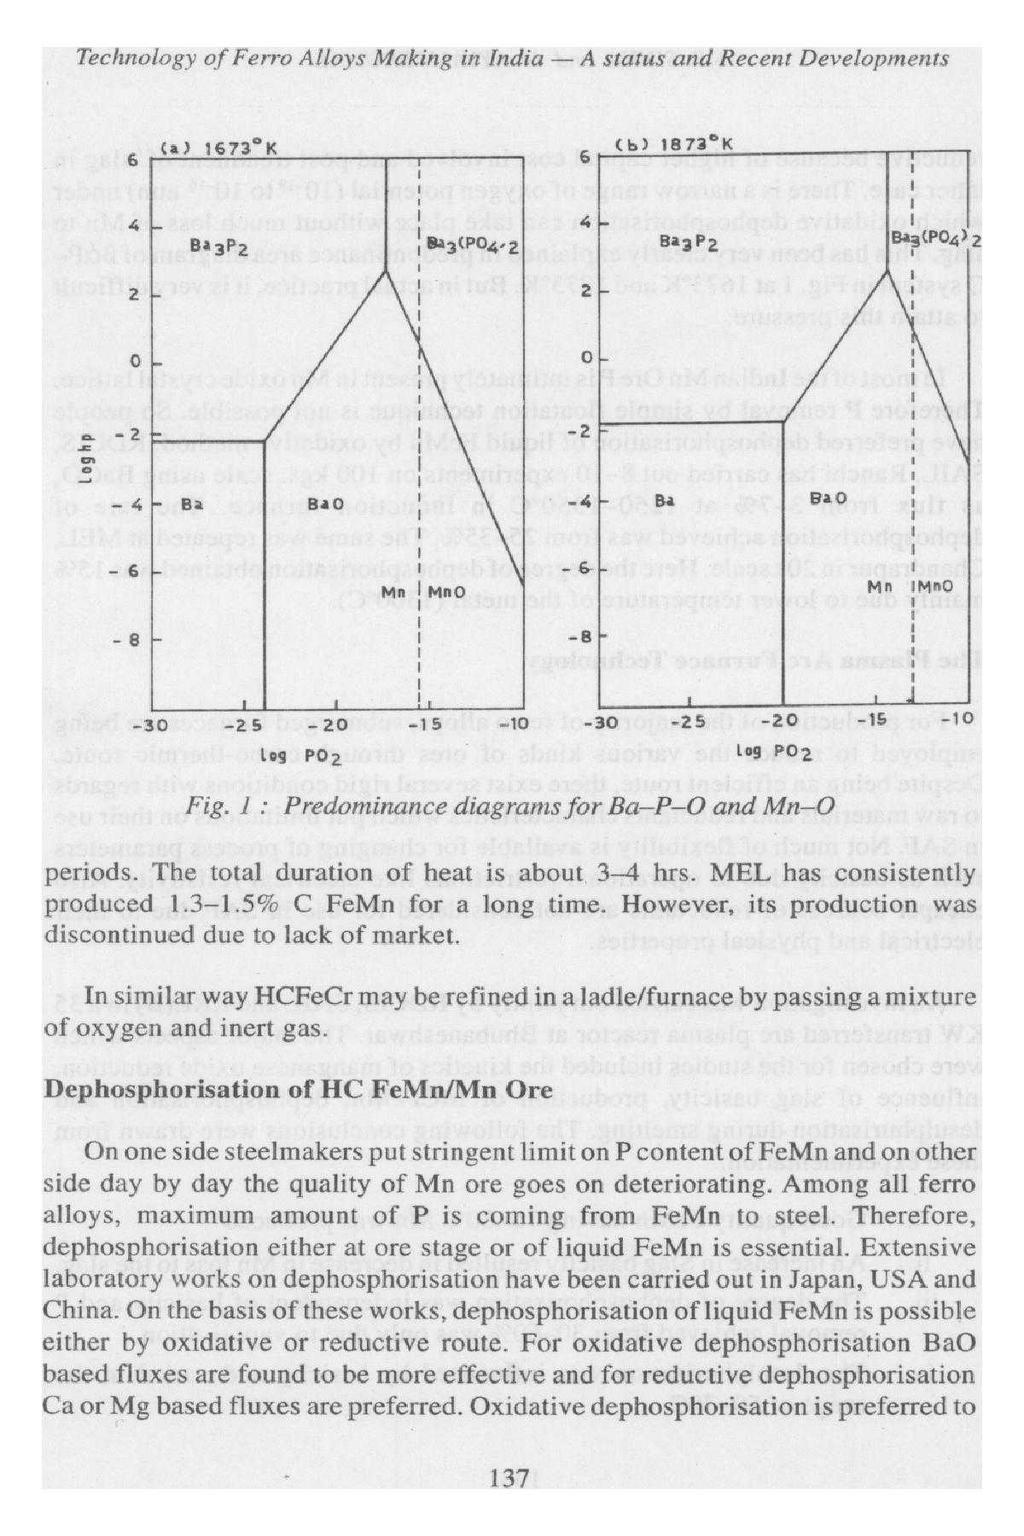 Technology of Ferro Alloys Making in India - A status and Recent Developments (a) 1673 (6) 1873 F Ba3P2 1 &3(P0412 8a3 P? C, -4 F Ba Sao Ba -30-25 - 20-15 -10-30 -25-20 -15-10 Log P02 Log PO-2 Fig.